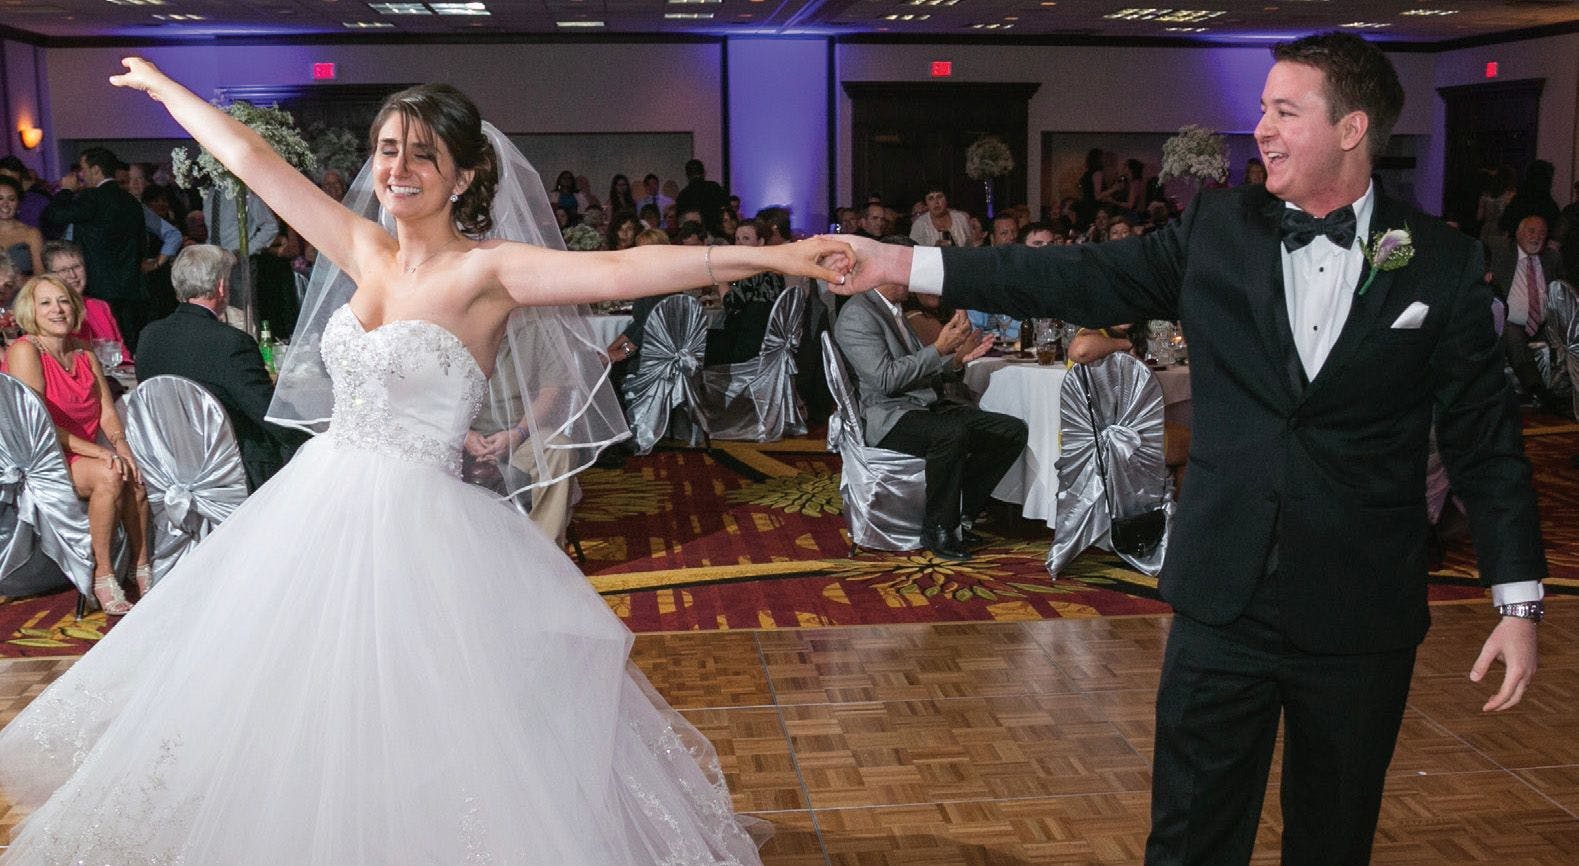 MATT HIZNAY dances with his wife, Ally, during their wedding reception on June 14, 2014. - COURTESY MATT HIZNAY / CIRINO PHOTOGRAPHY